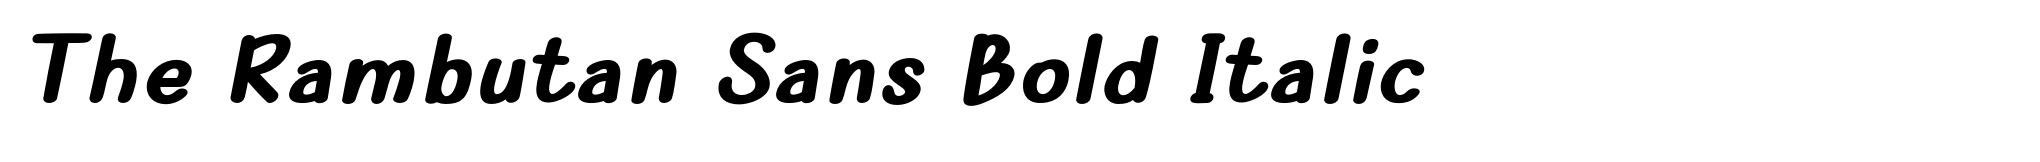 The Rambutan Sans Bold Italic image